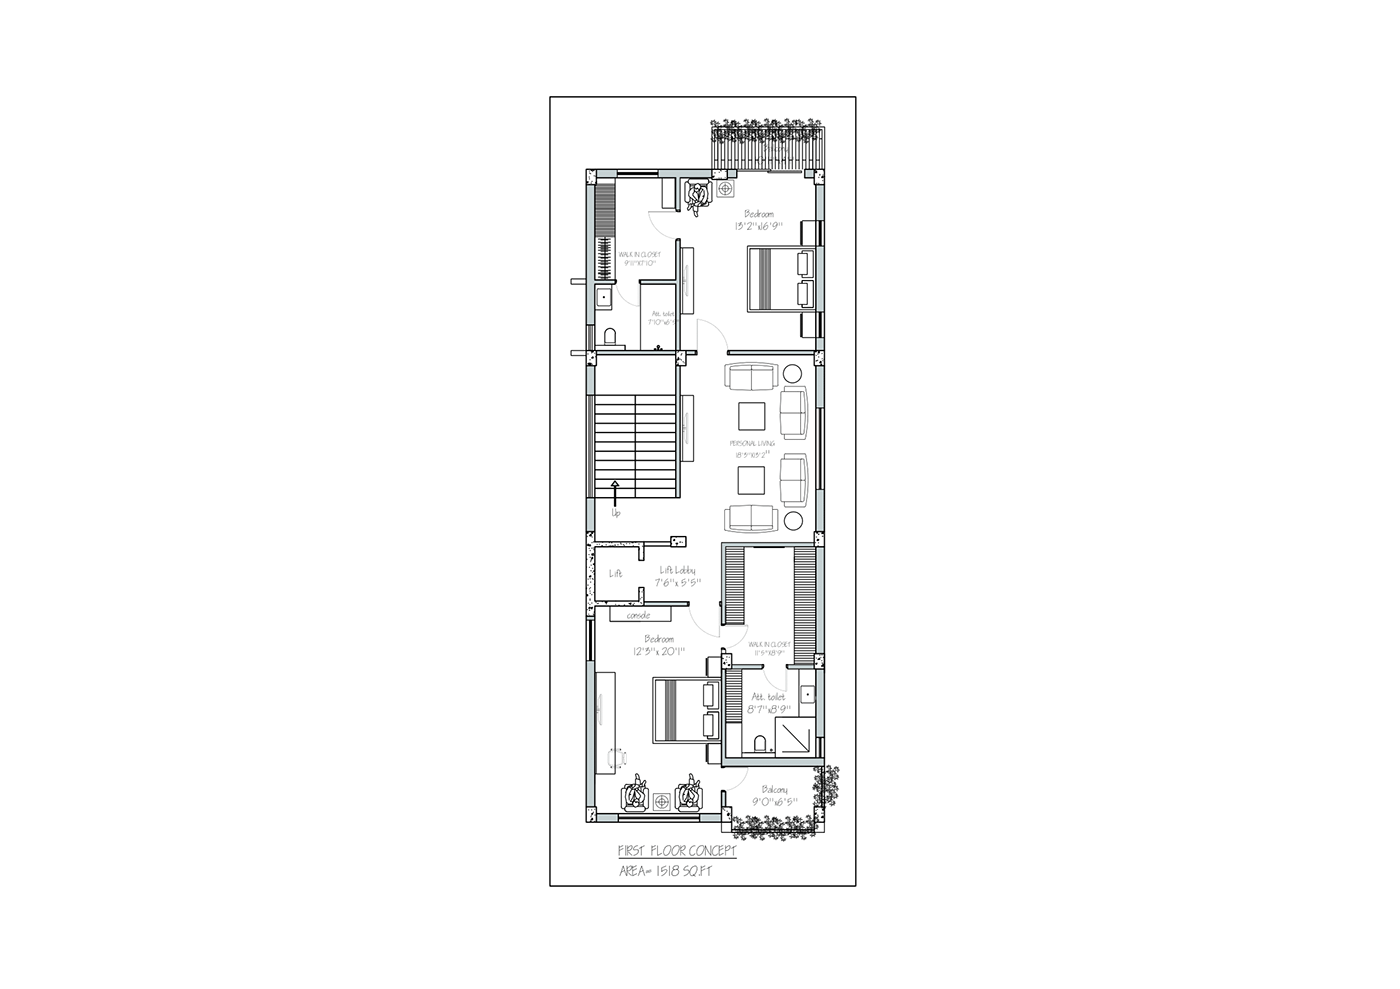 AutoCAD interior design  Space Planning Layout Interior design furniture layout